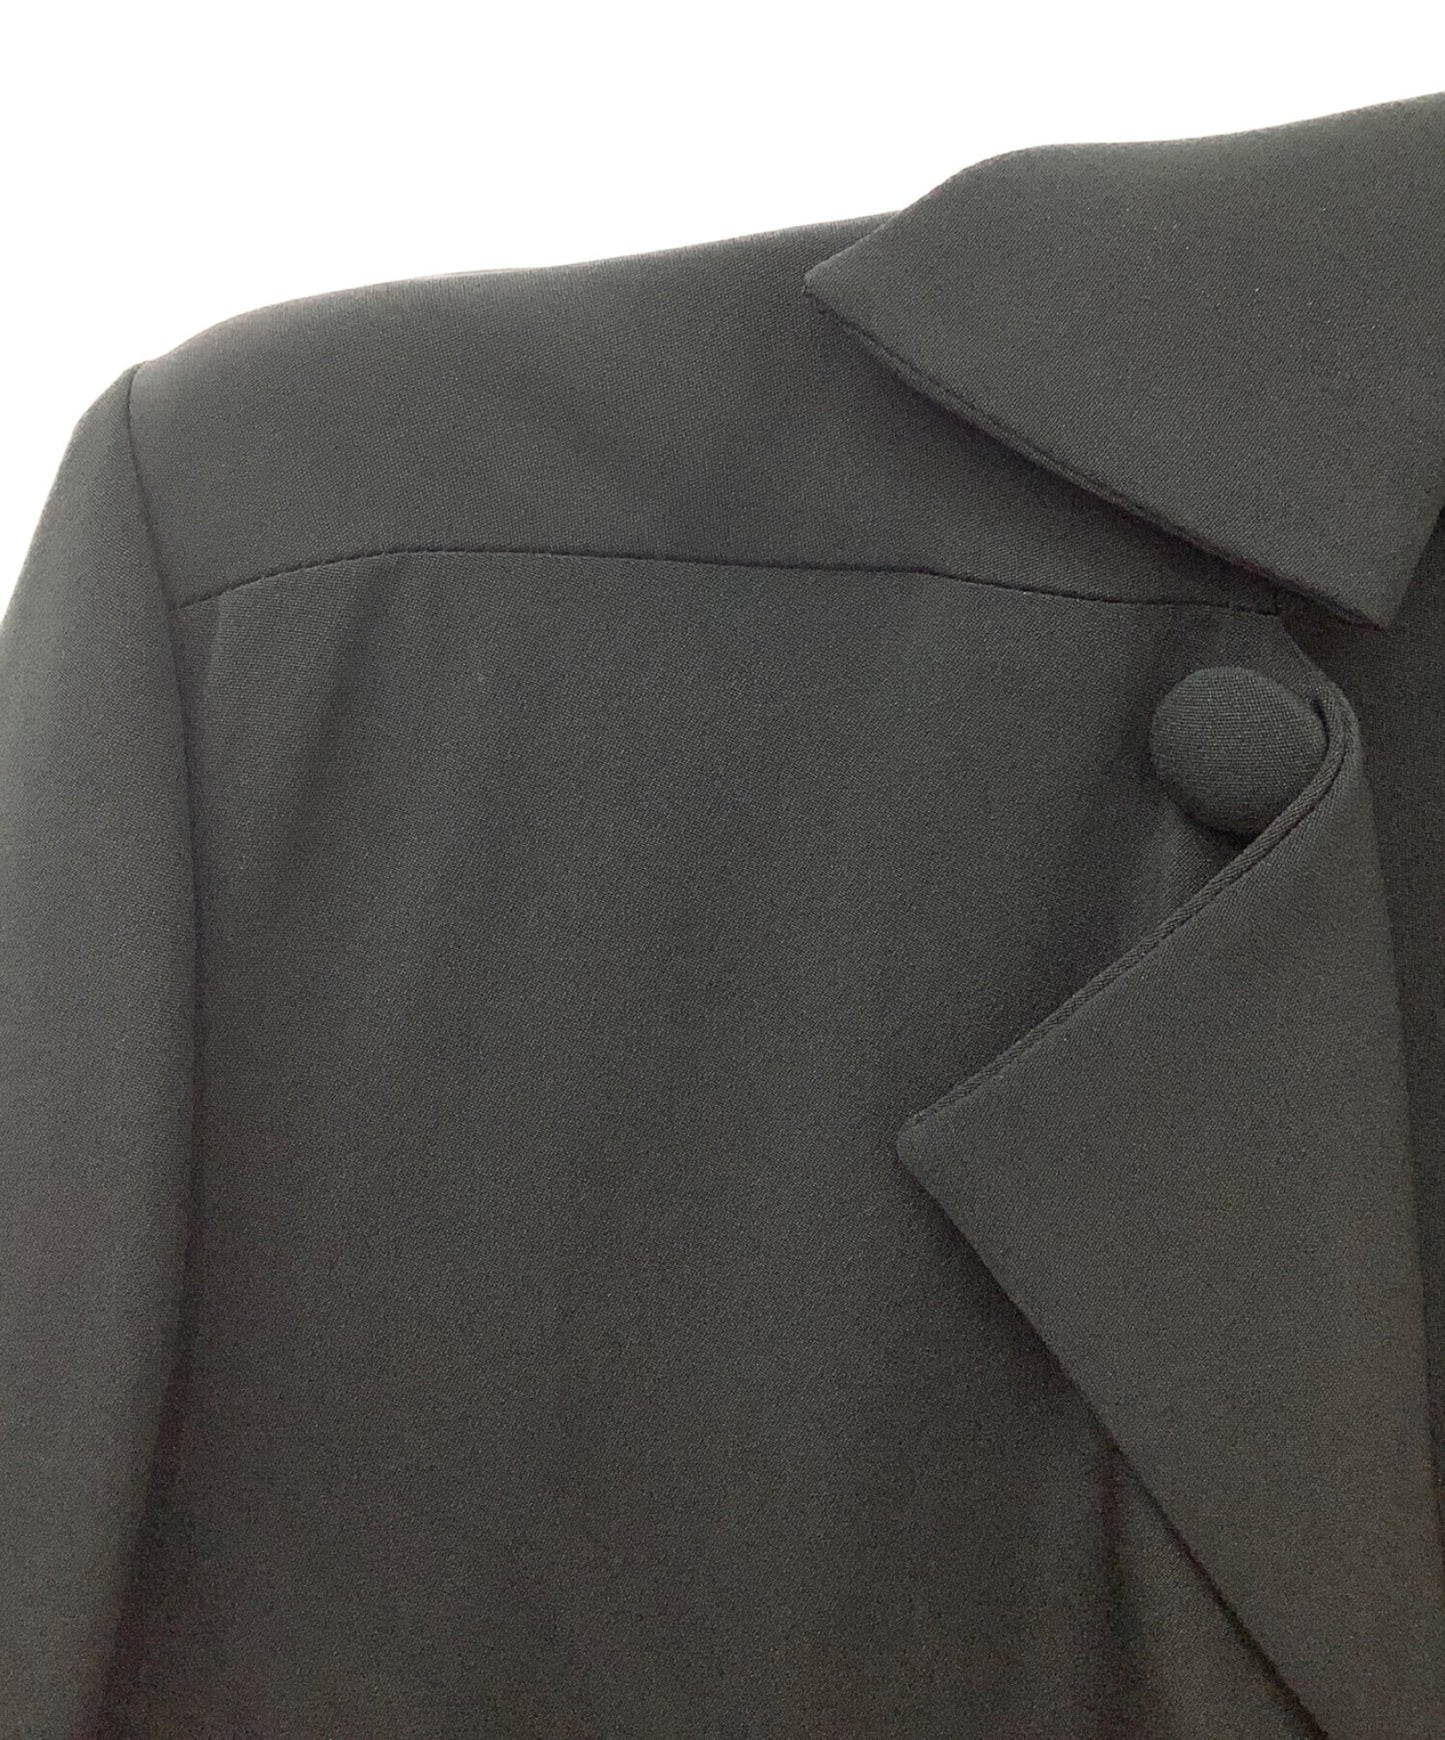 [Pre-owned] YOHJI YAMAMOTO silk jacket